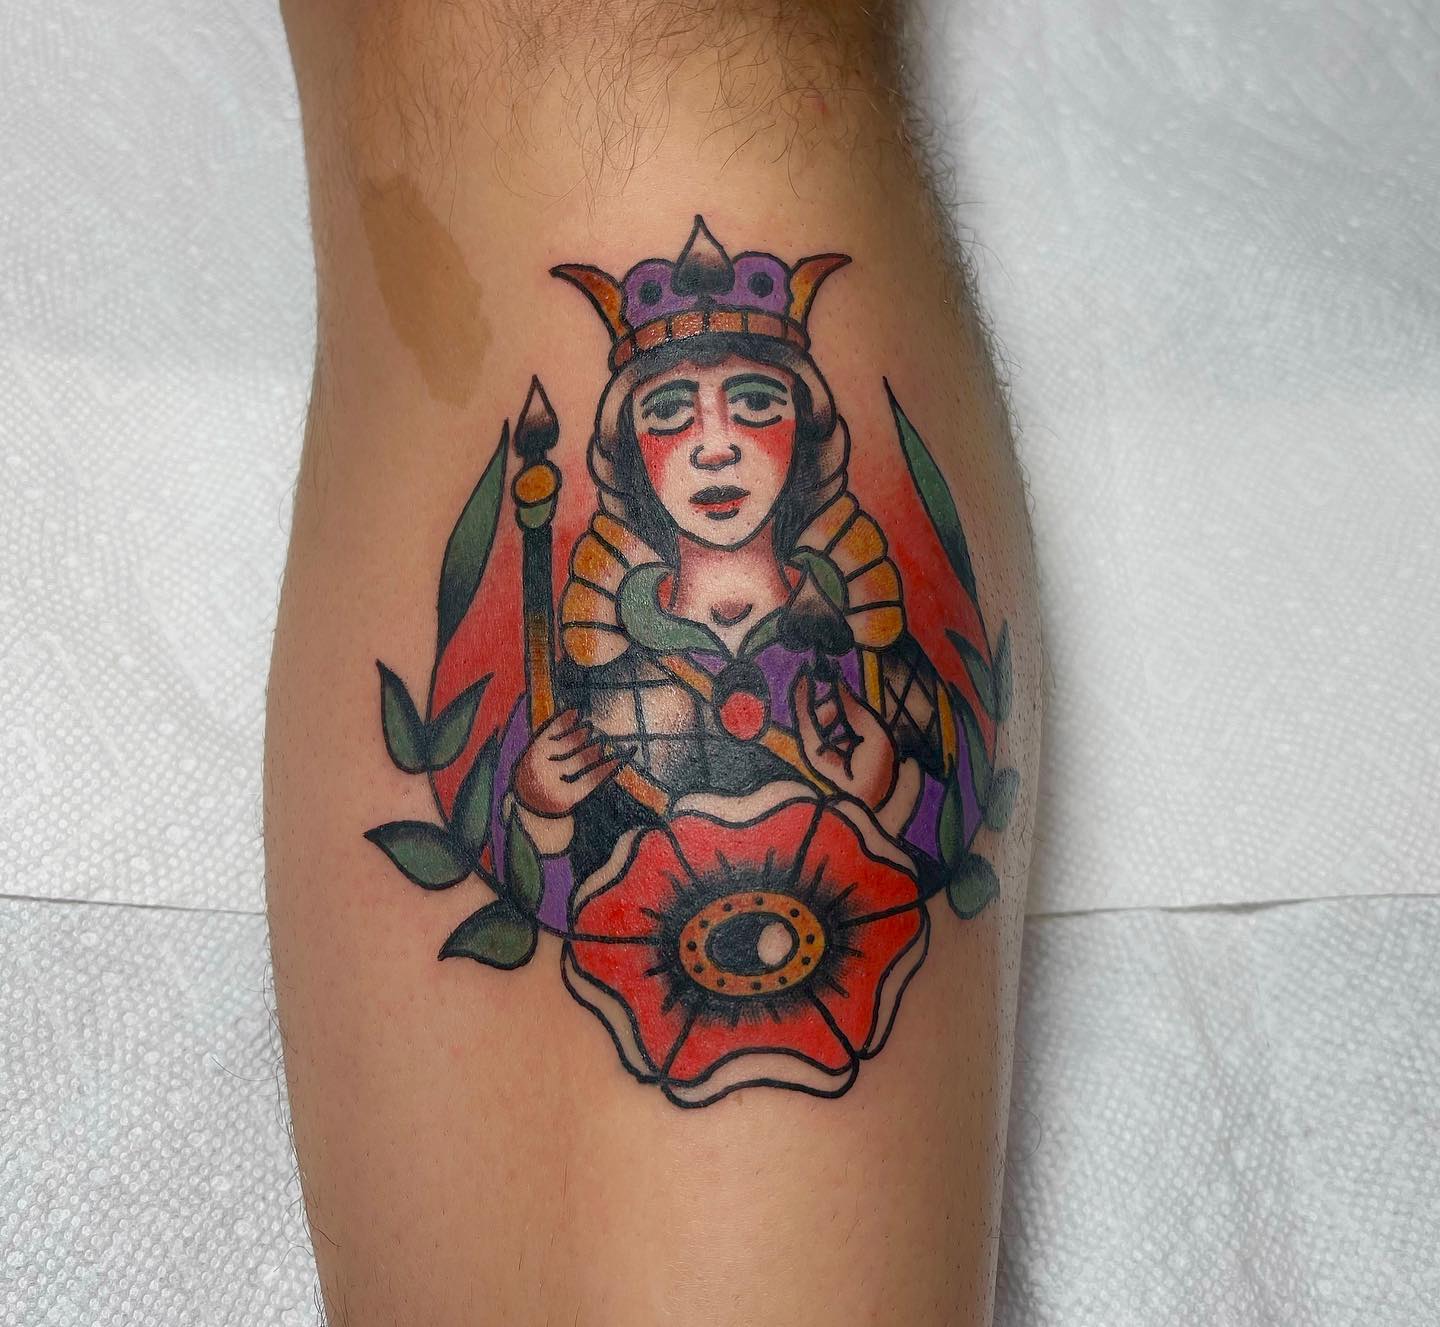 Tatuaje tradicional de la Reina de Espadas